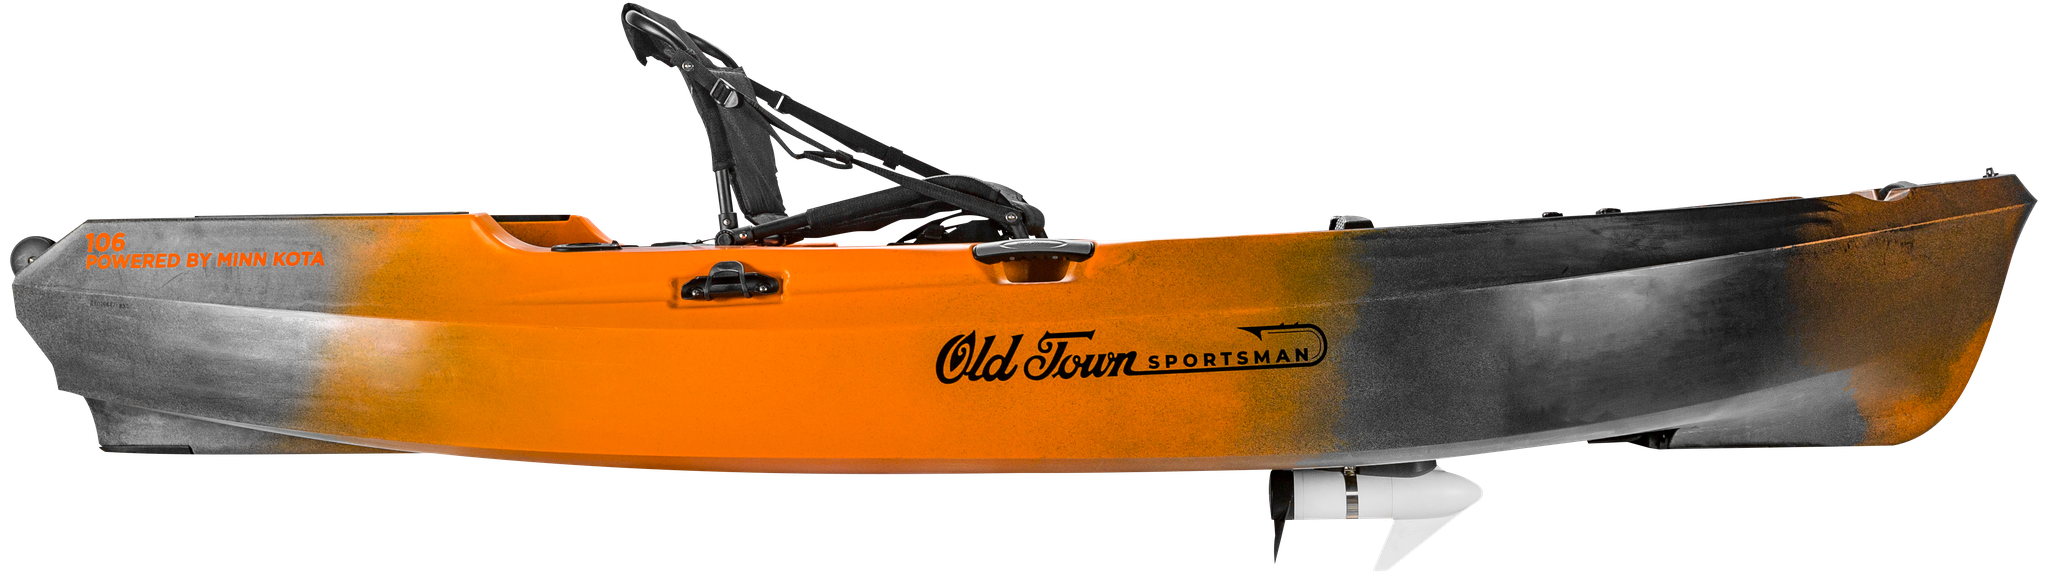 Old Town Sportsman Sportsman 106 MK Kayak